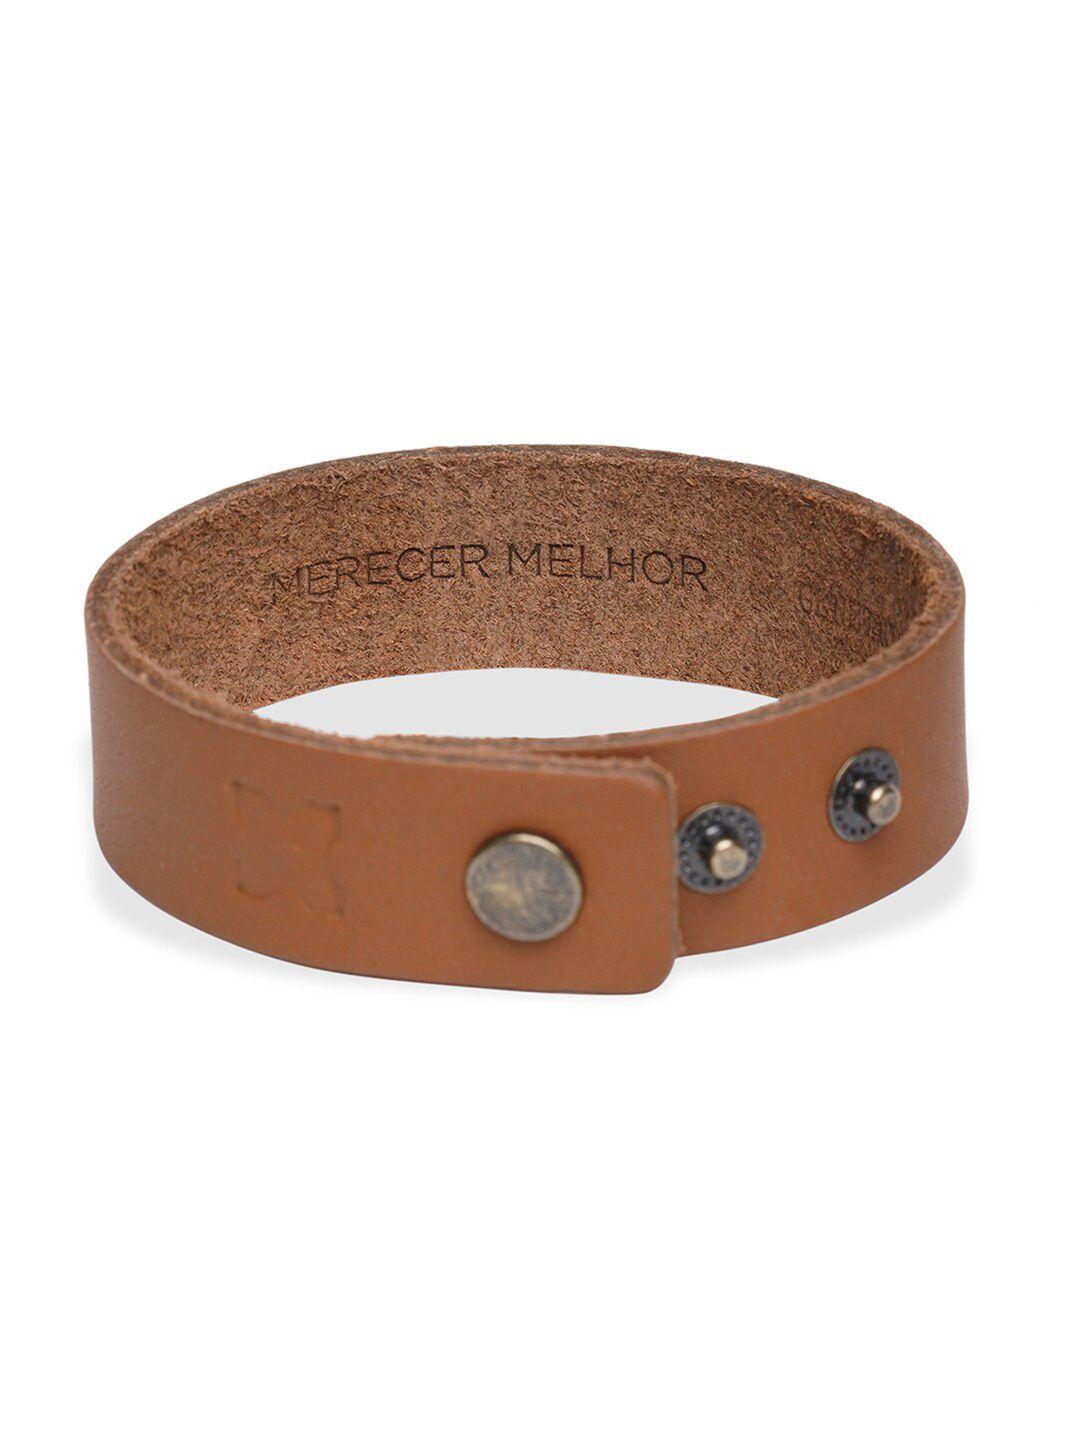 merecer melhor unisex brown leather handcrafted wraparound bracelet